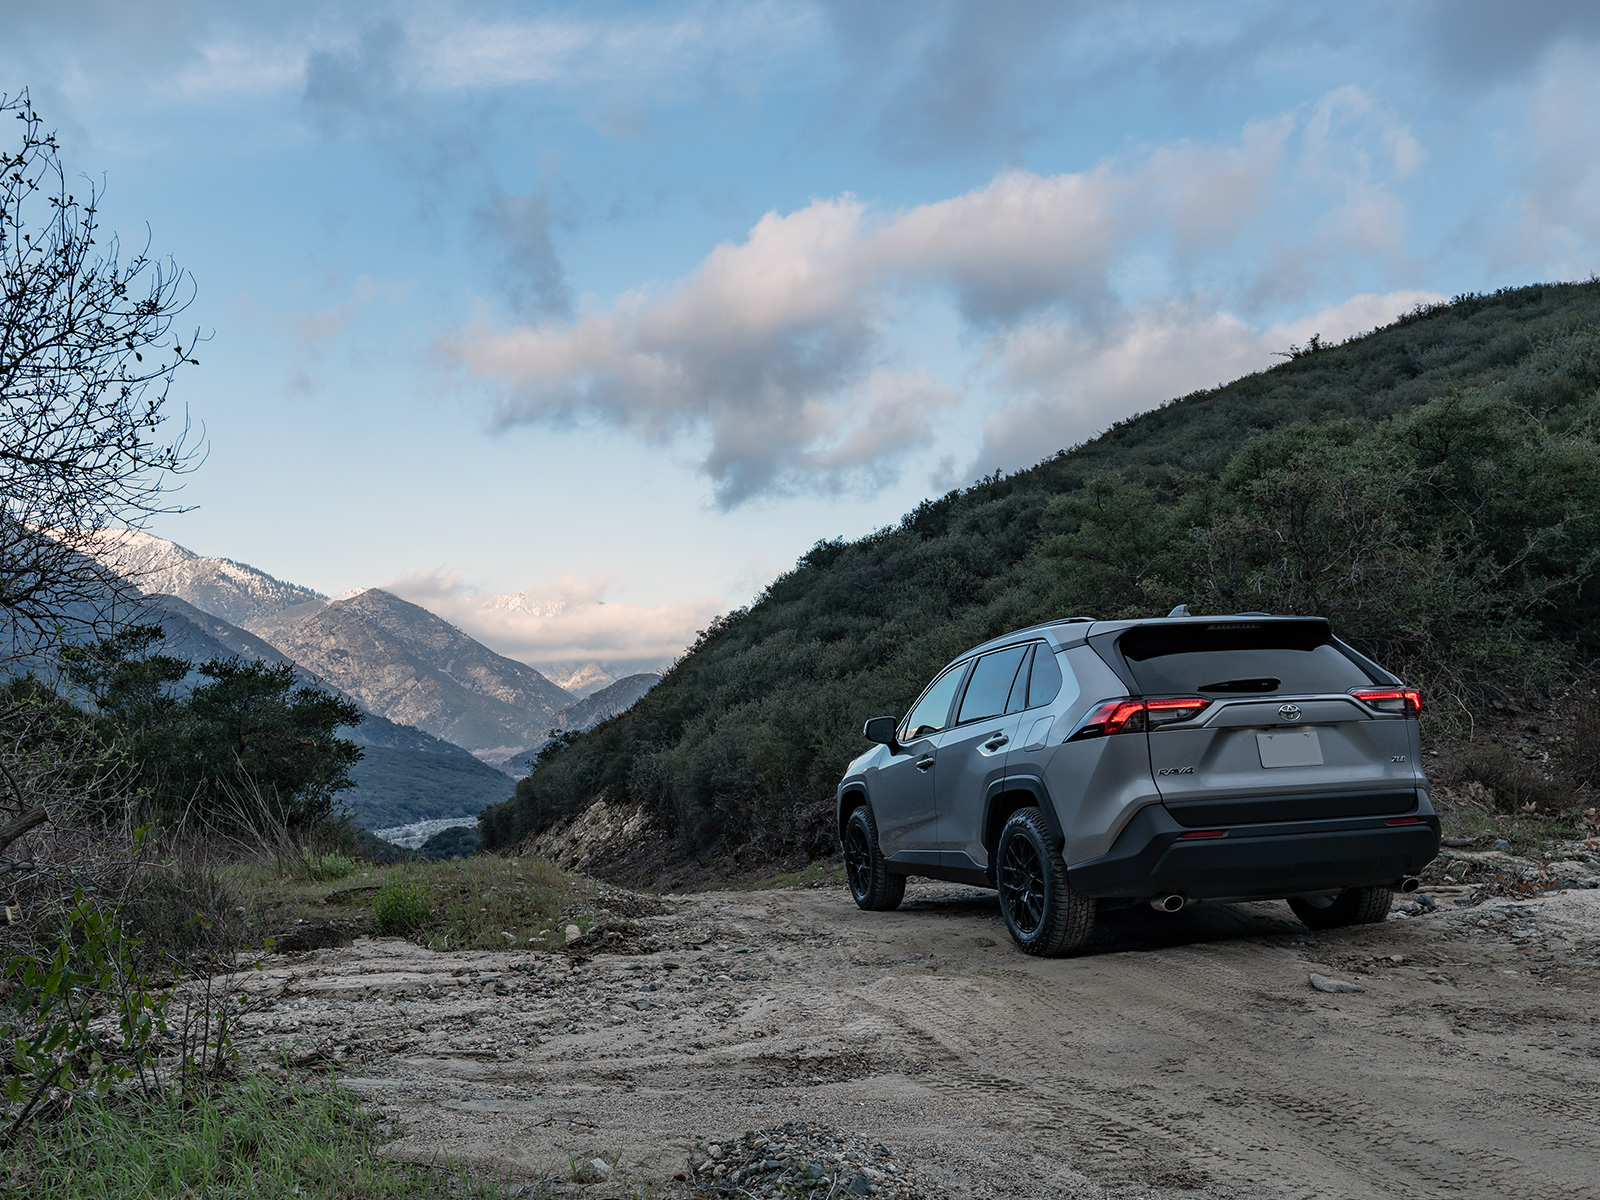 wildpeak all terrain tyres on a new Toyota RAV4 on a dirt mountain road